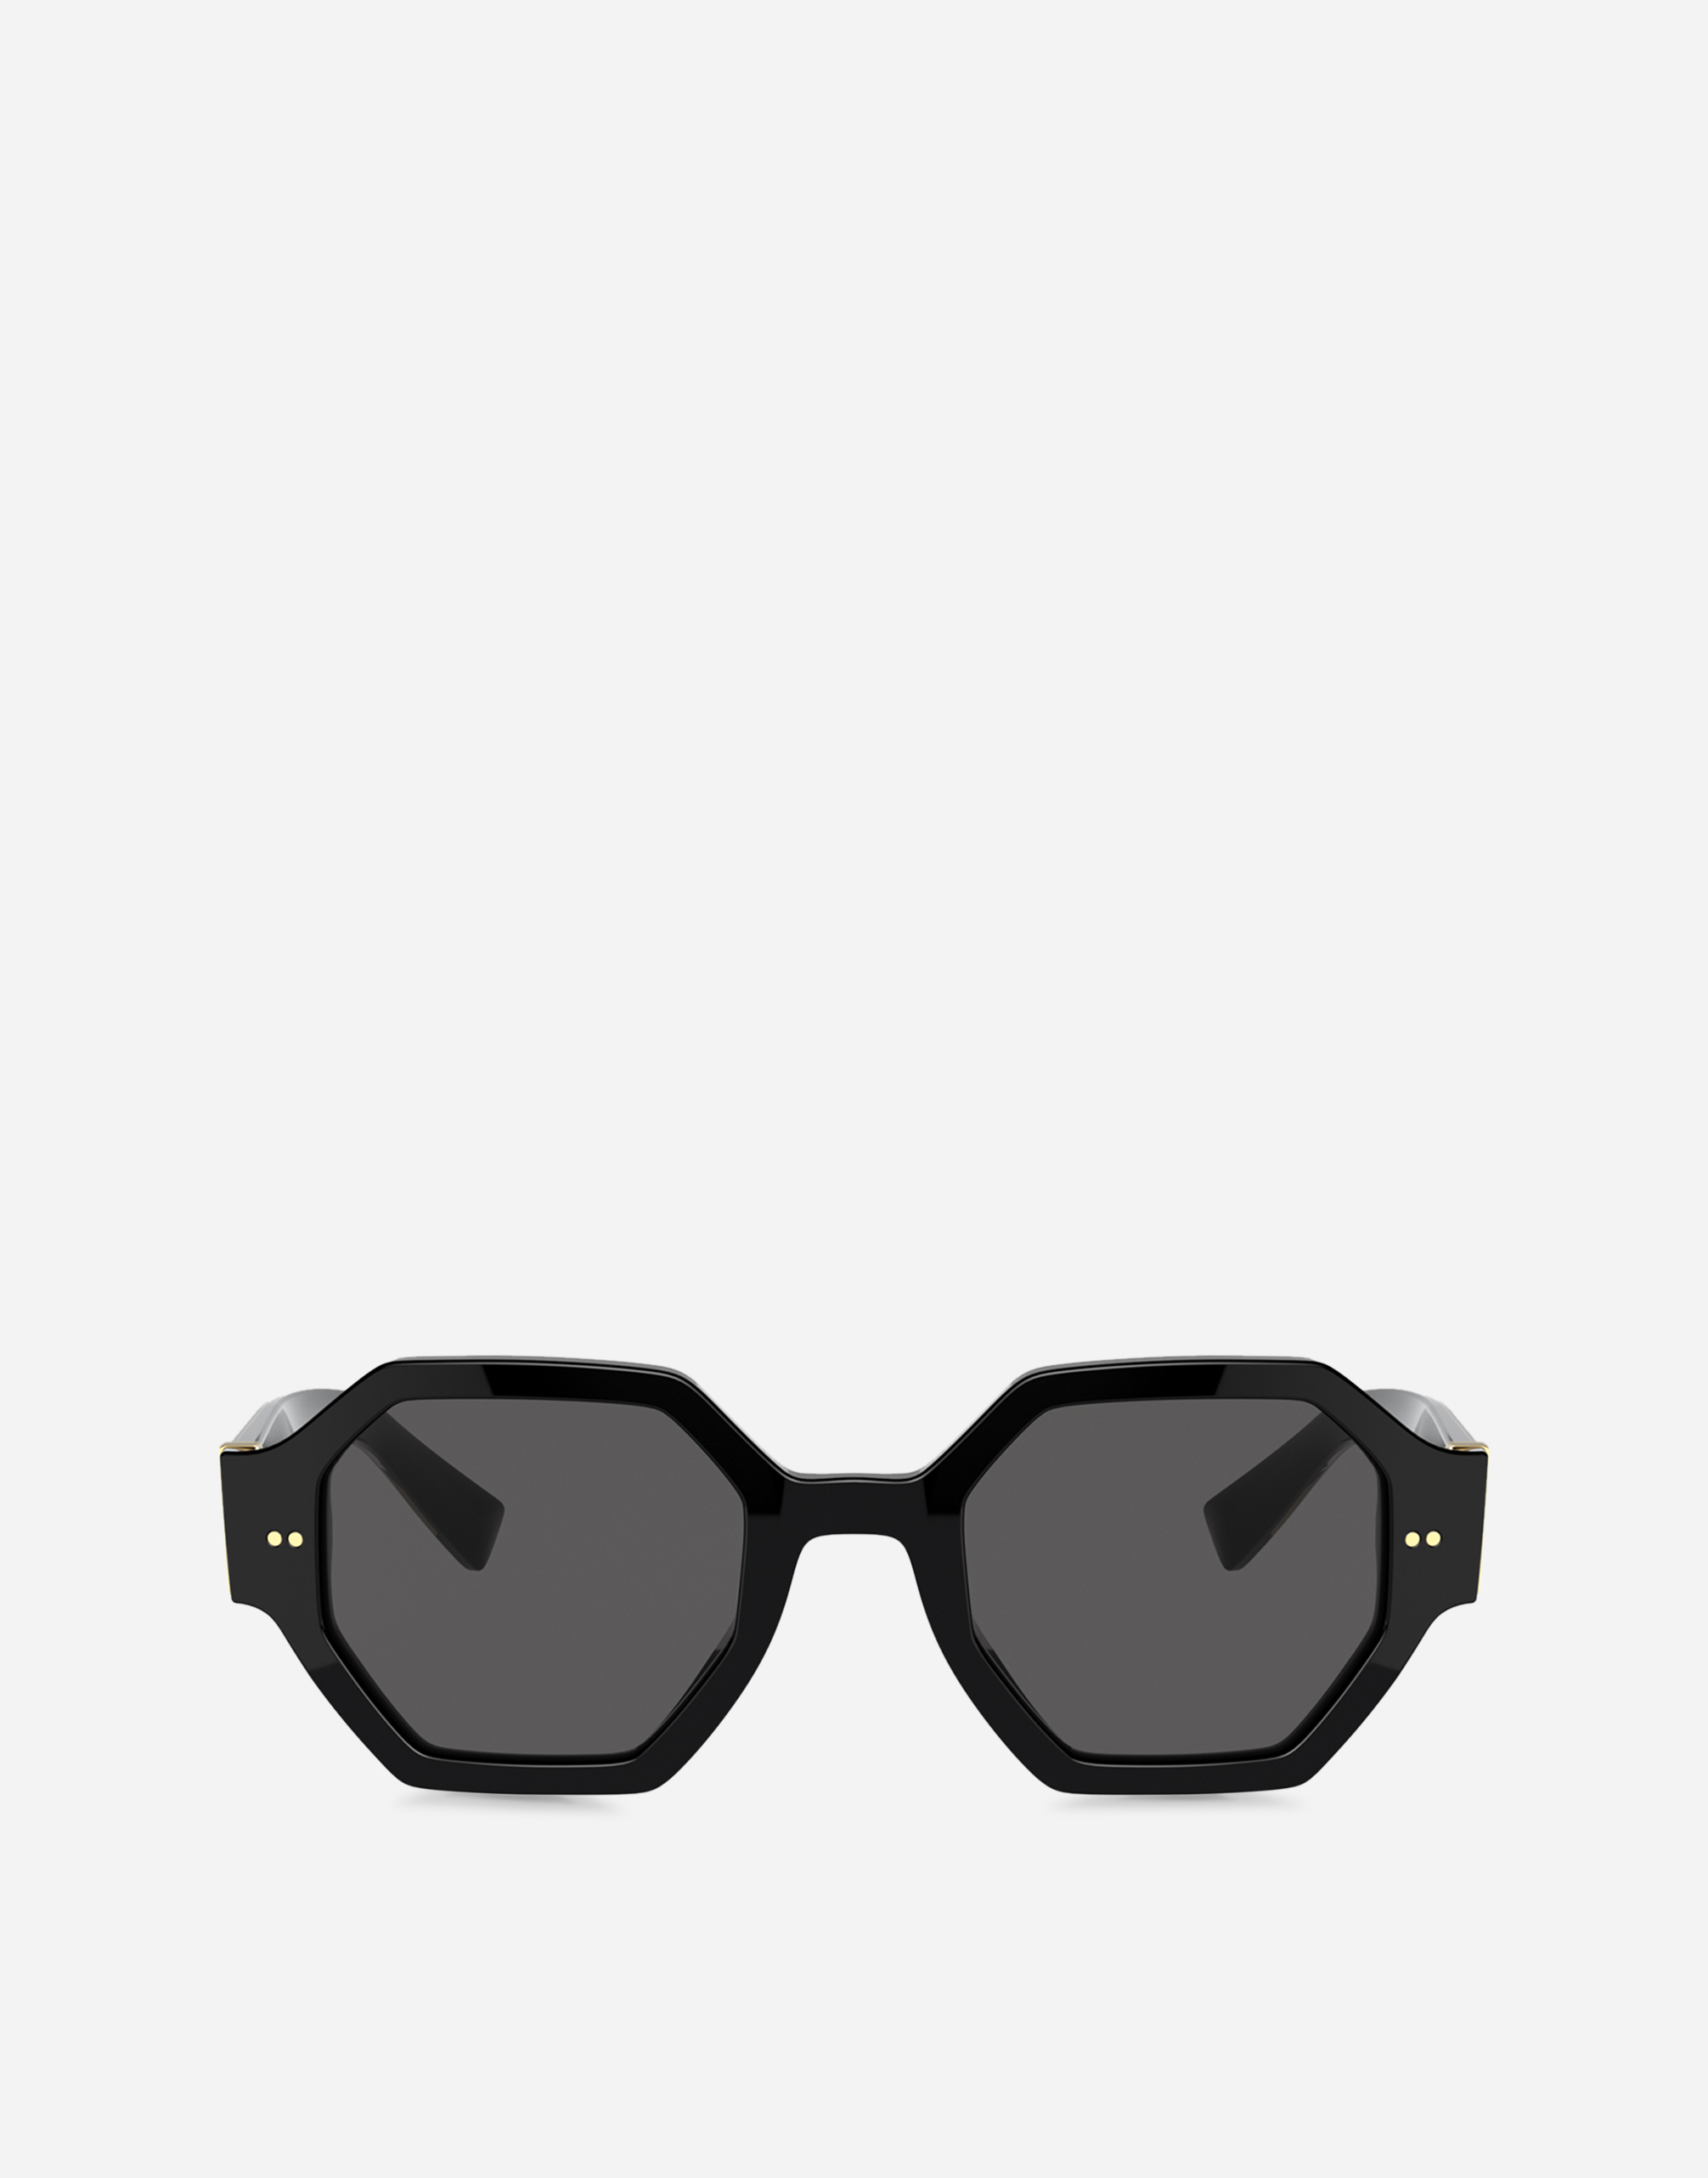 Gros grain sunglasses in Black